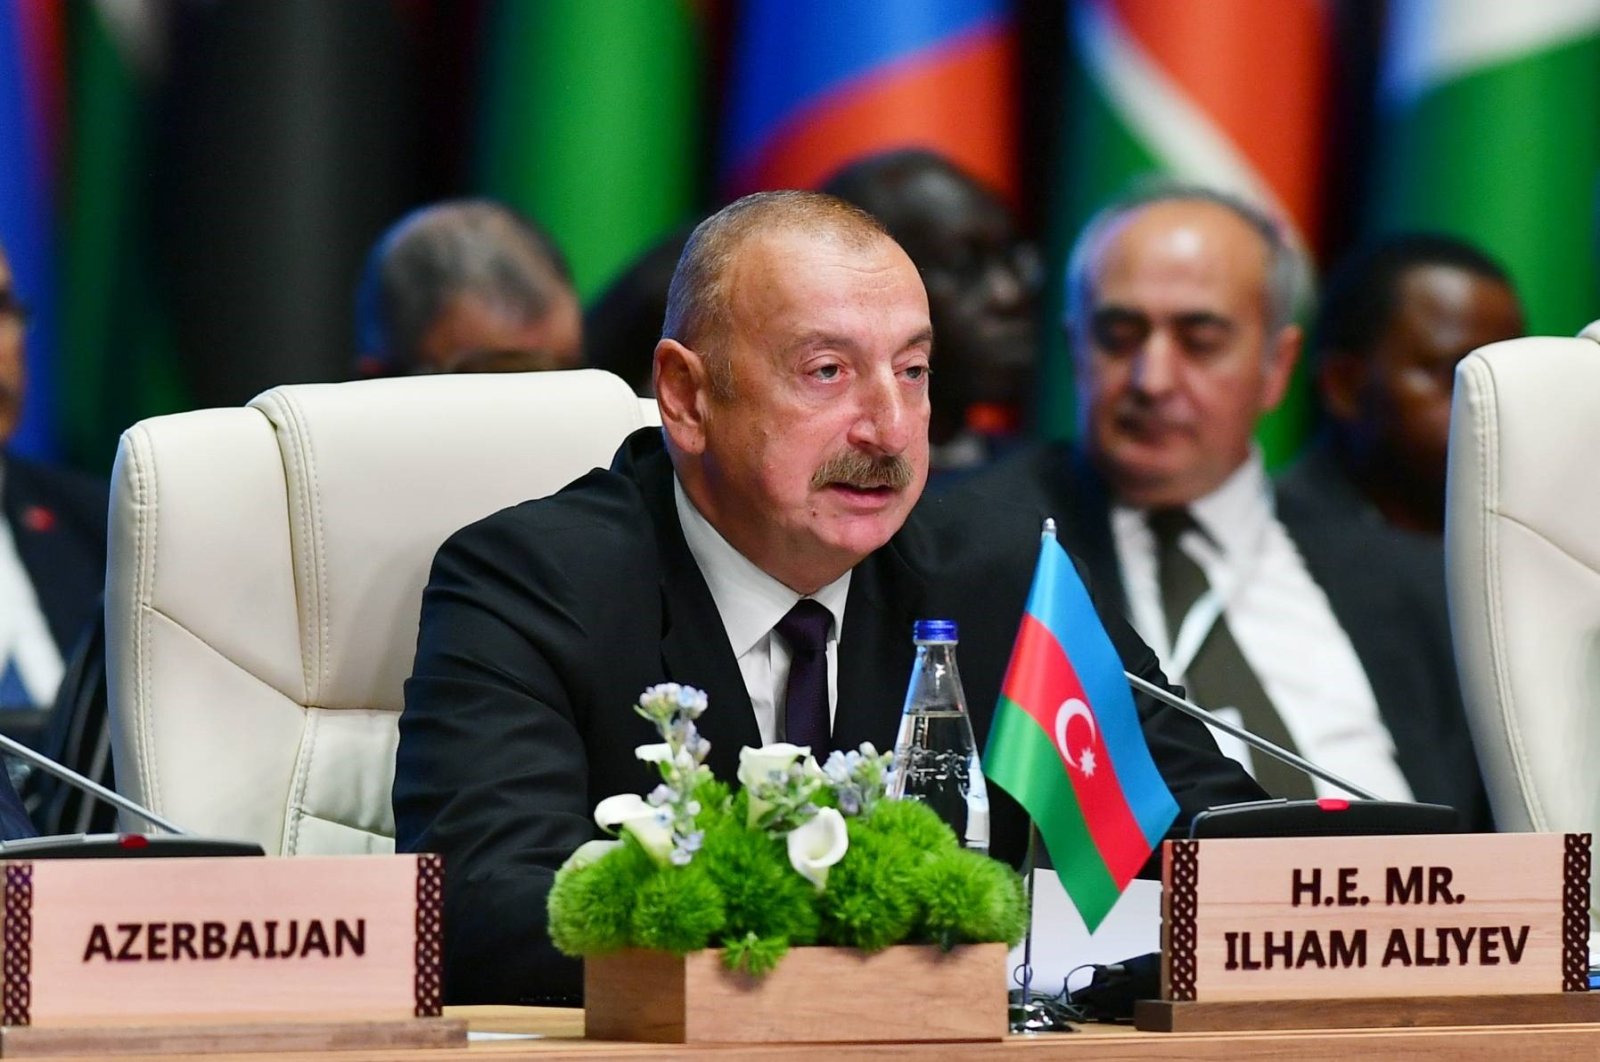 Prancis mengejar kebijakan neokolonial: Presiden Azerbaijan Aliyev